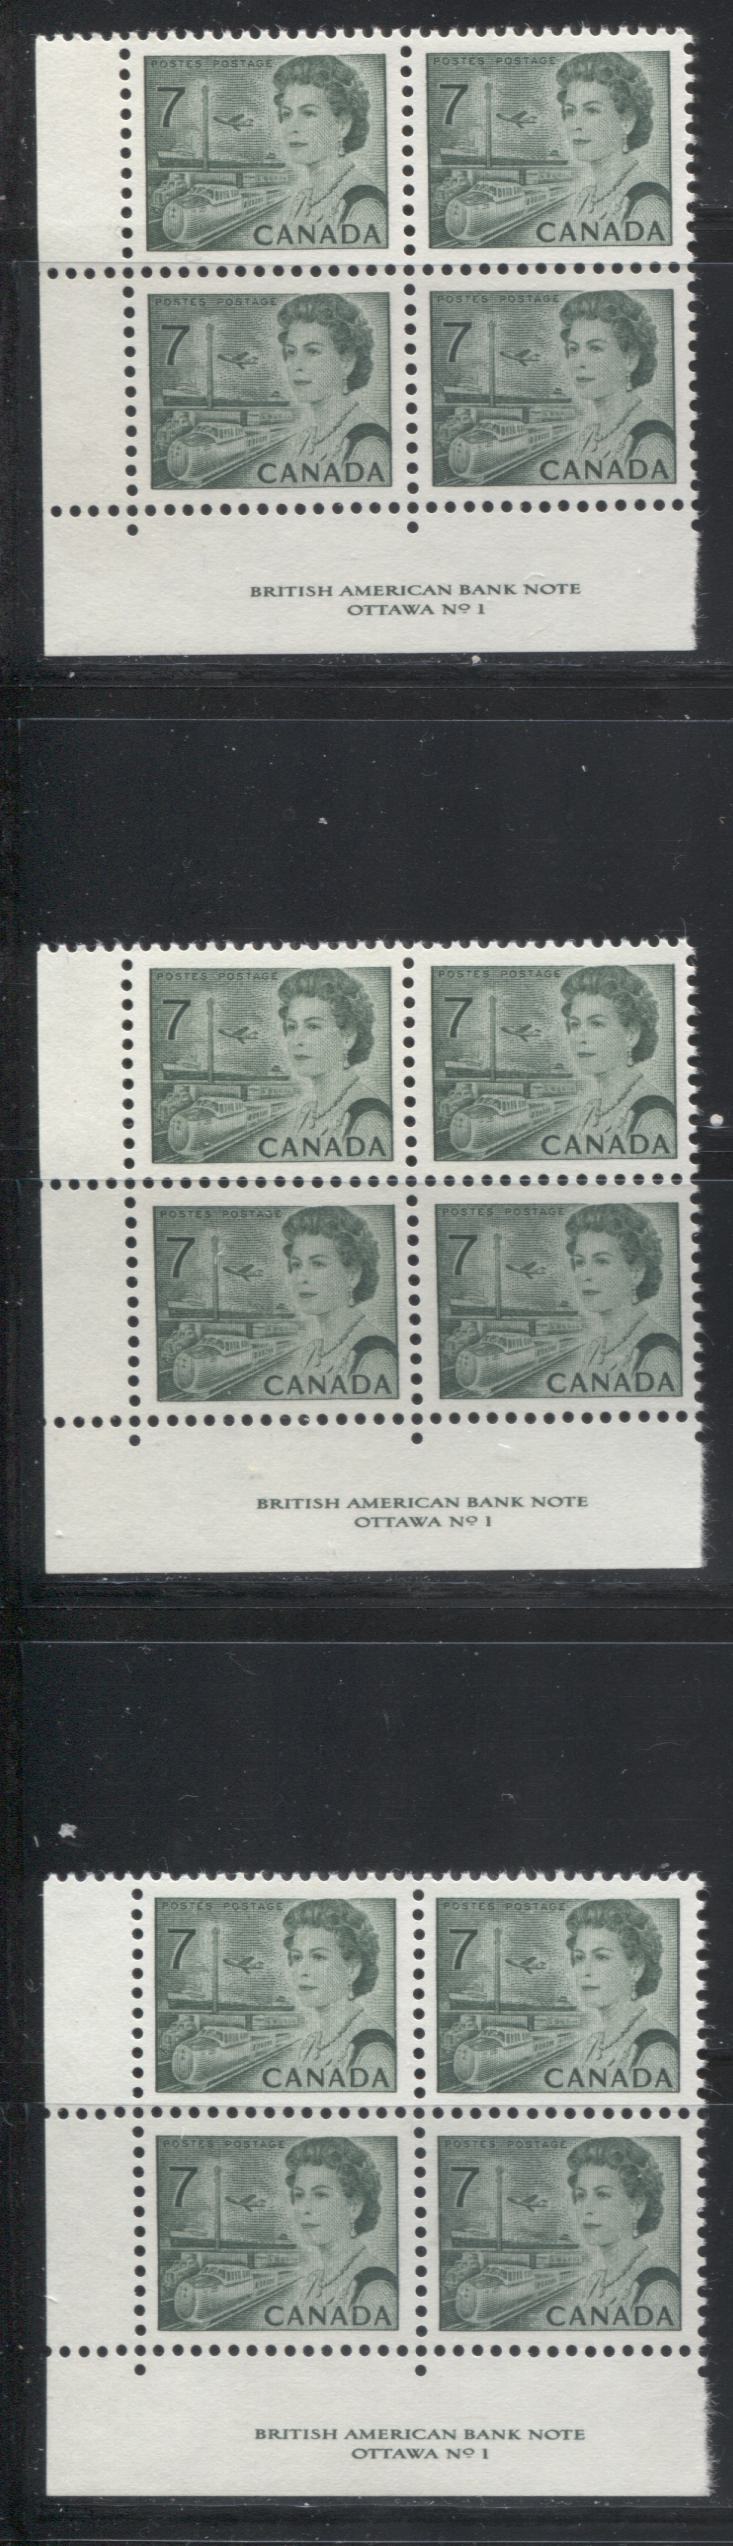 Lot 130 Canada #543 7c Deep Emerald Green Queen Elizabeth II, 1967-1973 Centennial Issue, Three VFNH LL Plate 1 Blocks of 4 On NF & DF Grayish & Ivory Paper With Dex Gum, Perf 12.5 x 12